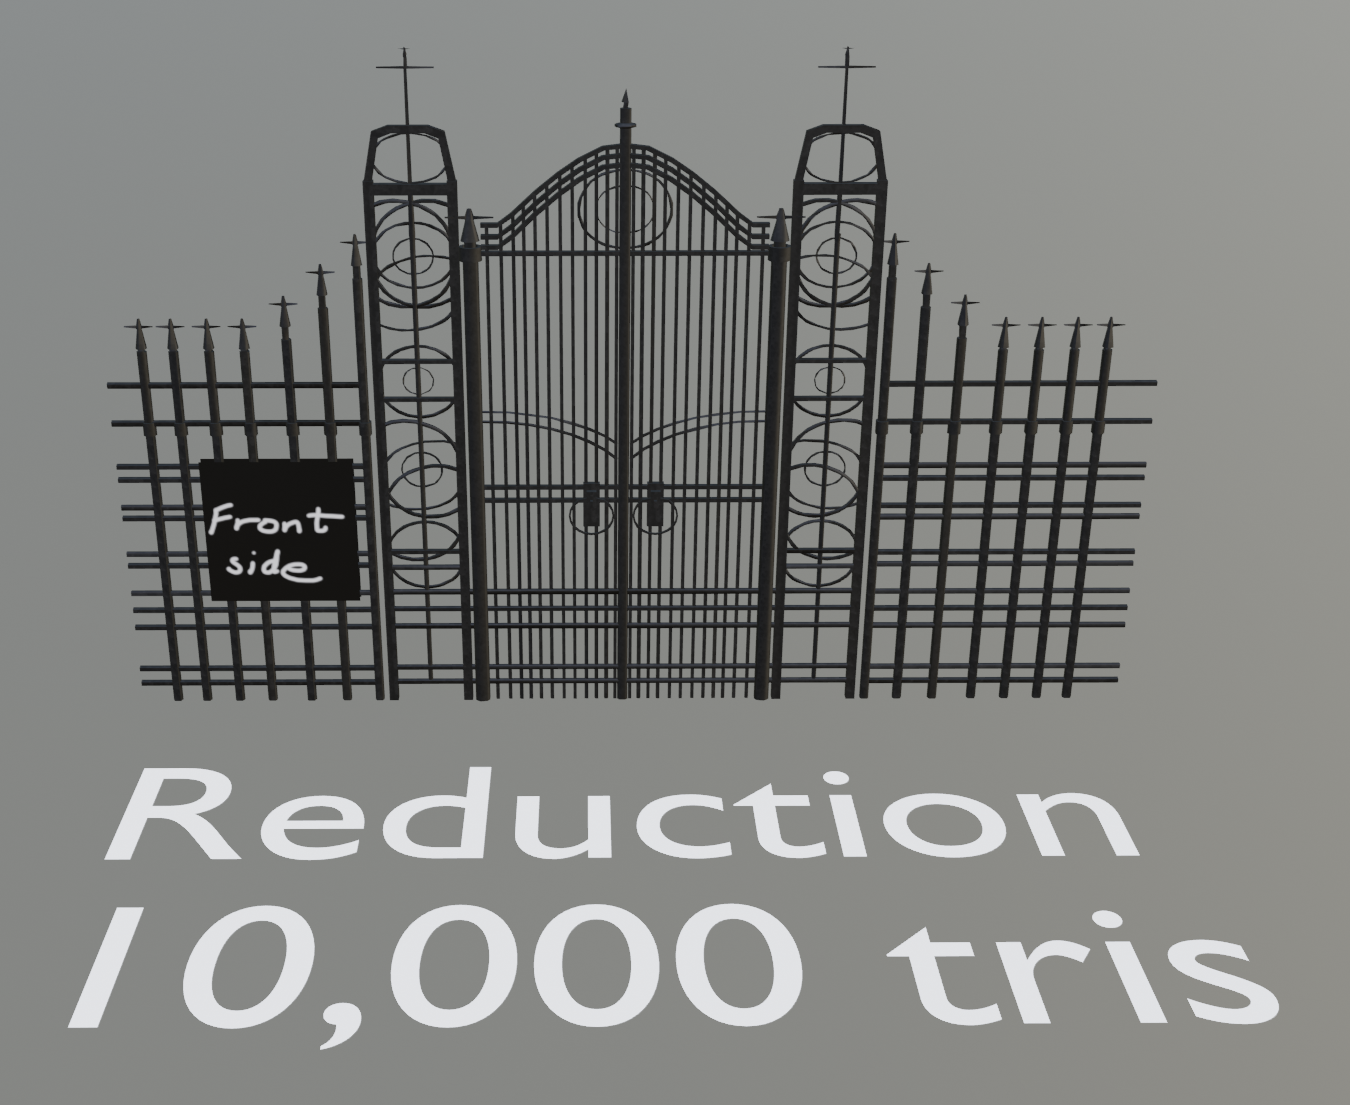 Reduced gate at 10 000 tris